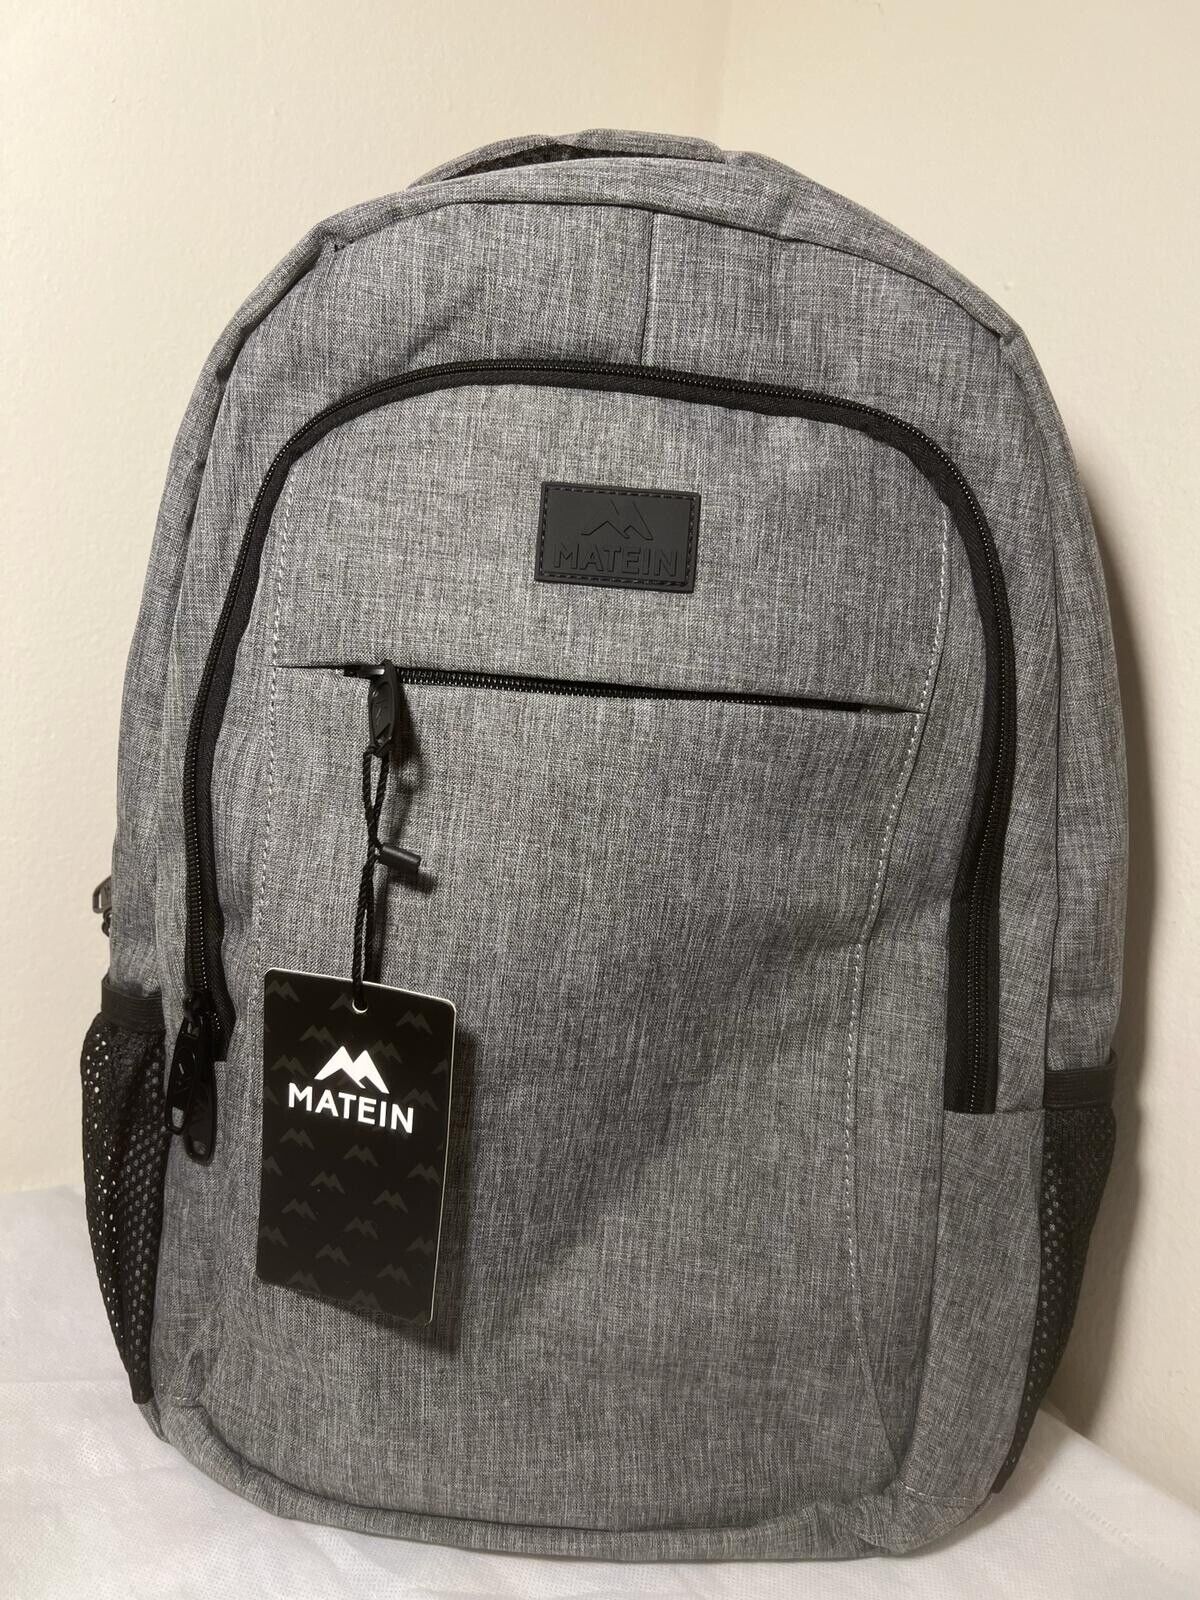 Matein Travel Laptop Backpack Anti-Theft School Bag USB Port- Gray